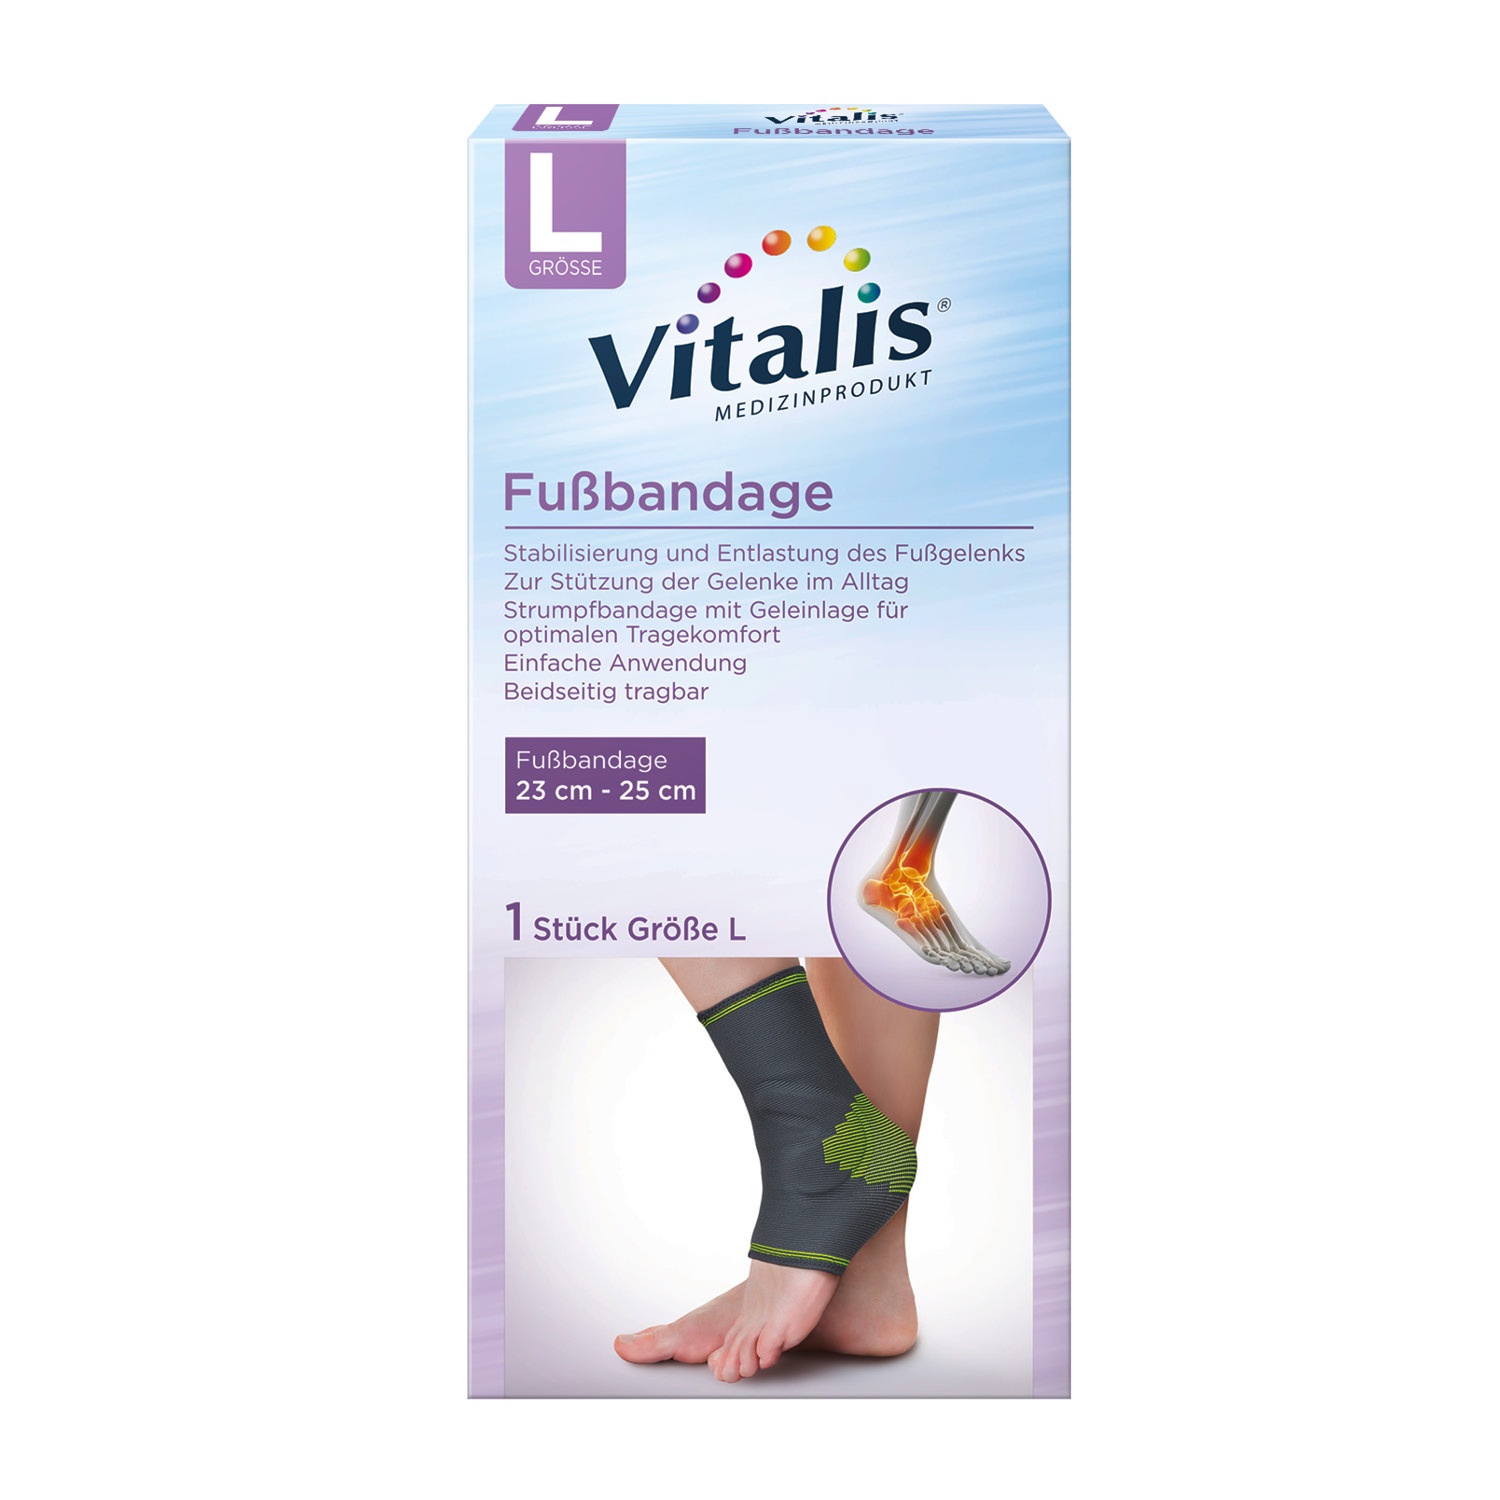 Vitalis® Hand- oder Fußgelenkbandage